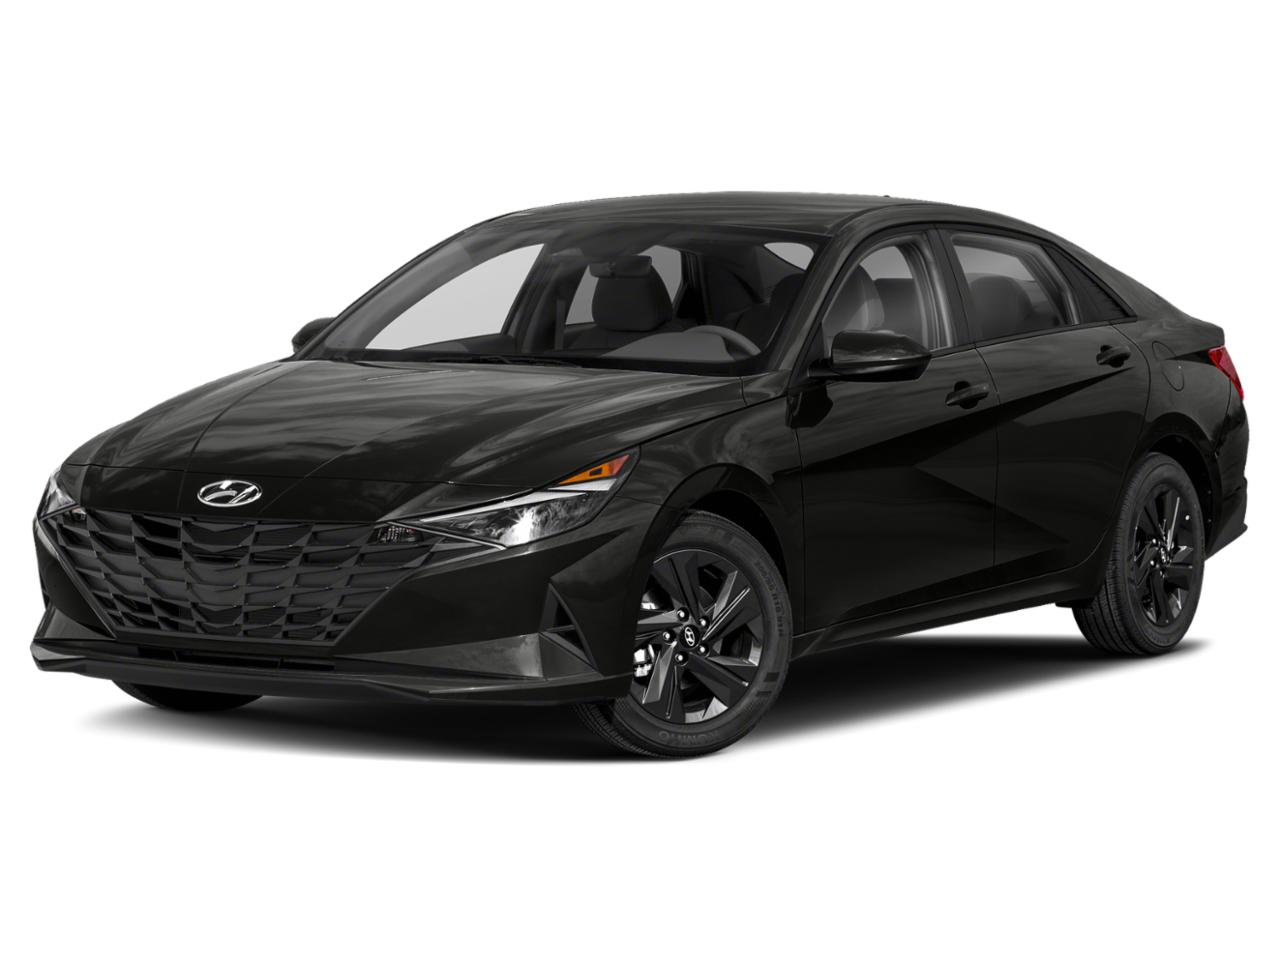 New 2023 Hyundai ELANTRA (Black) in Chicago & Northwest Indiana VIN